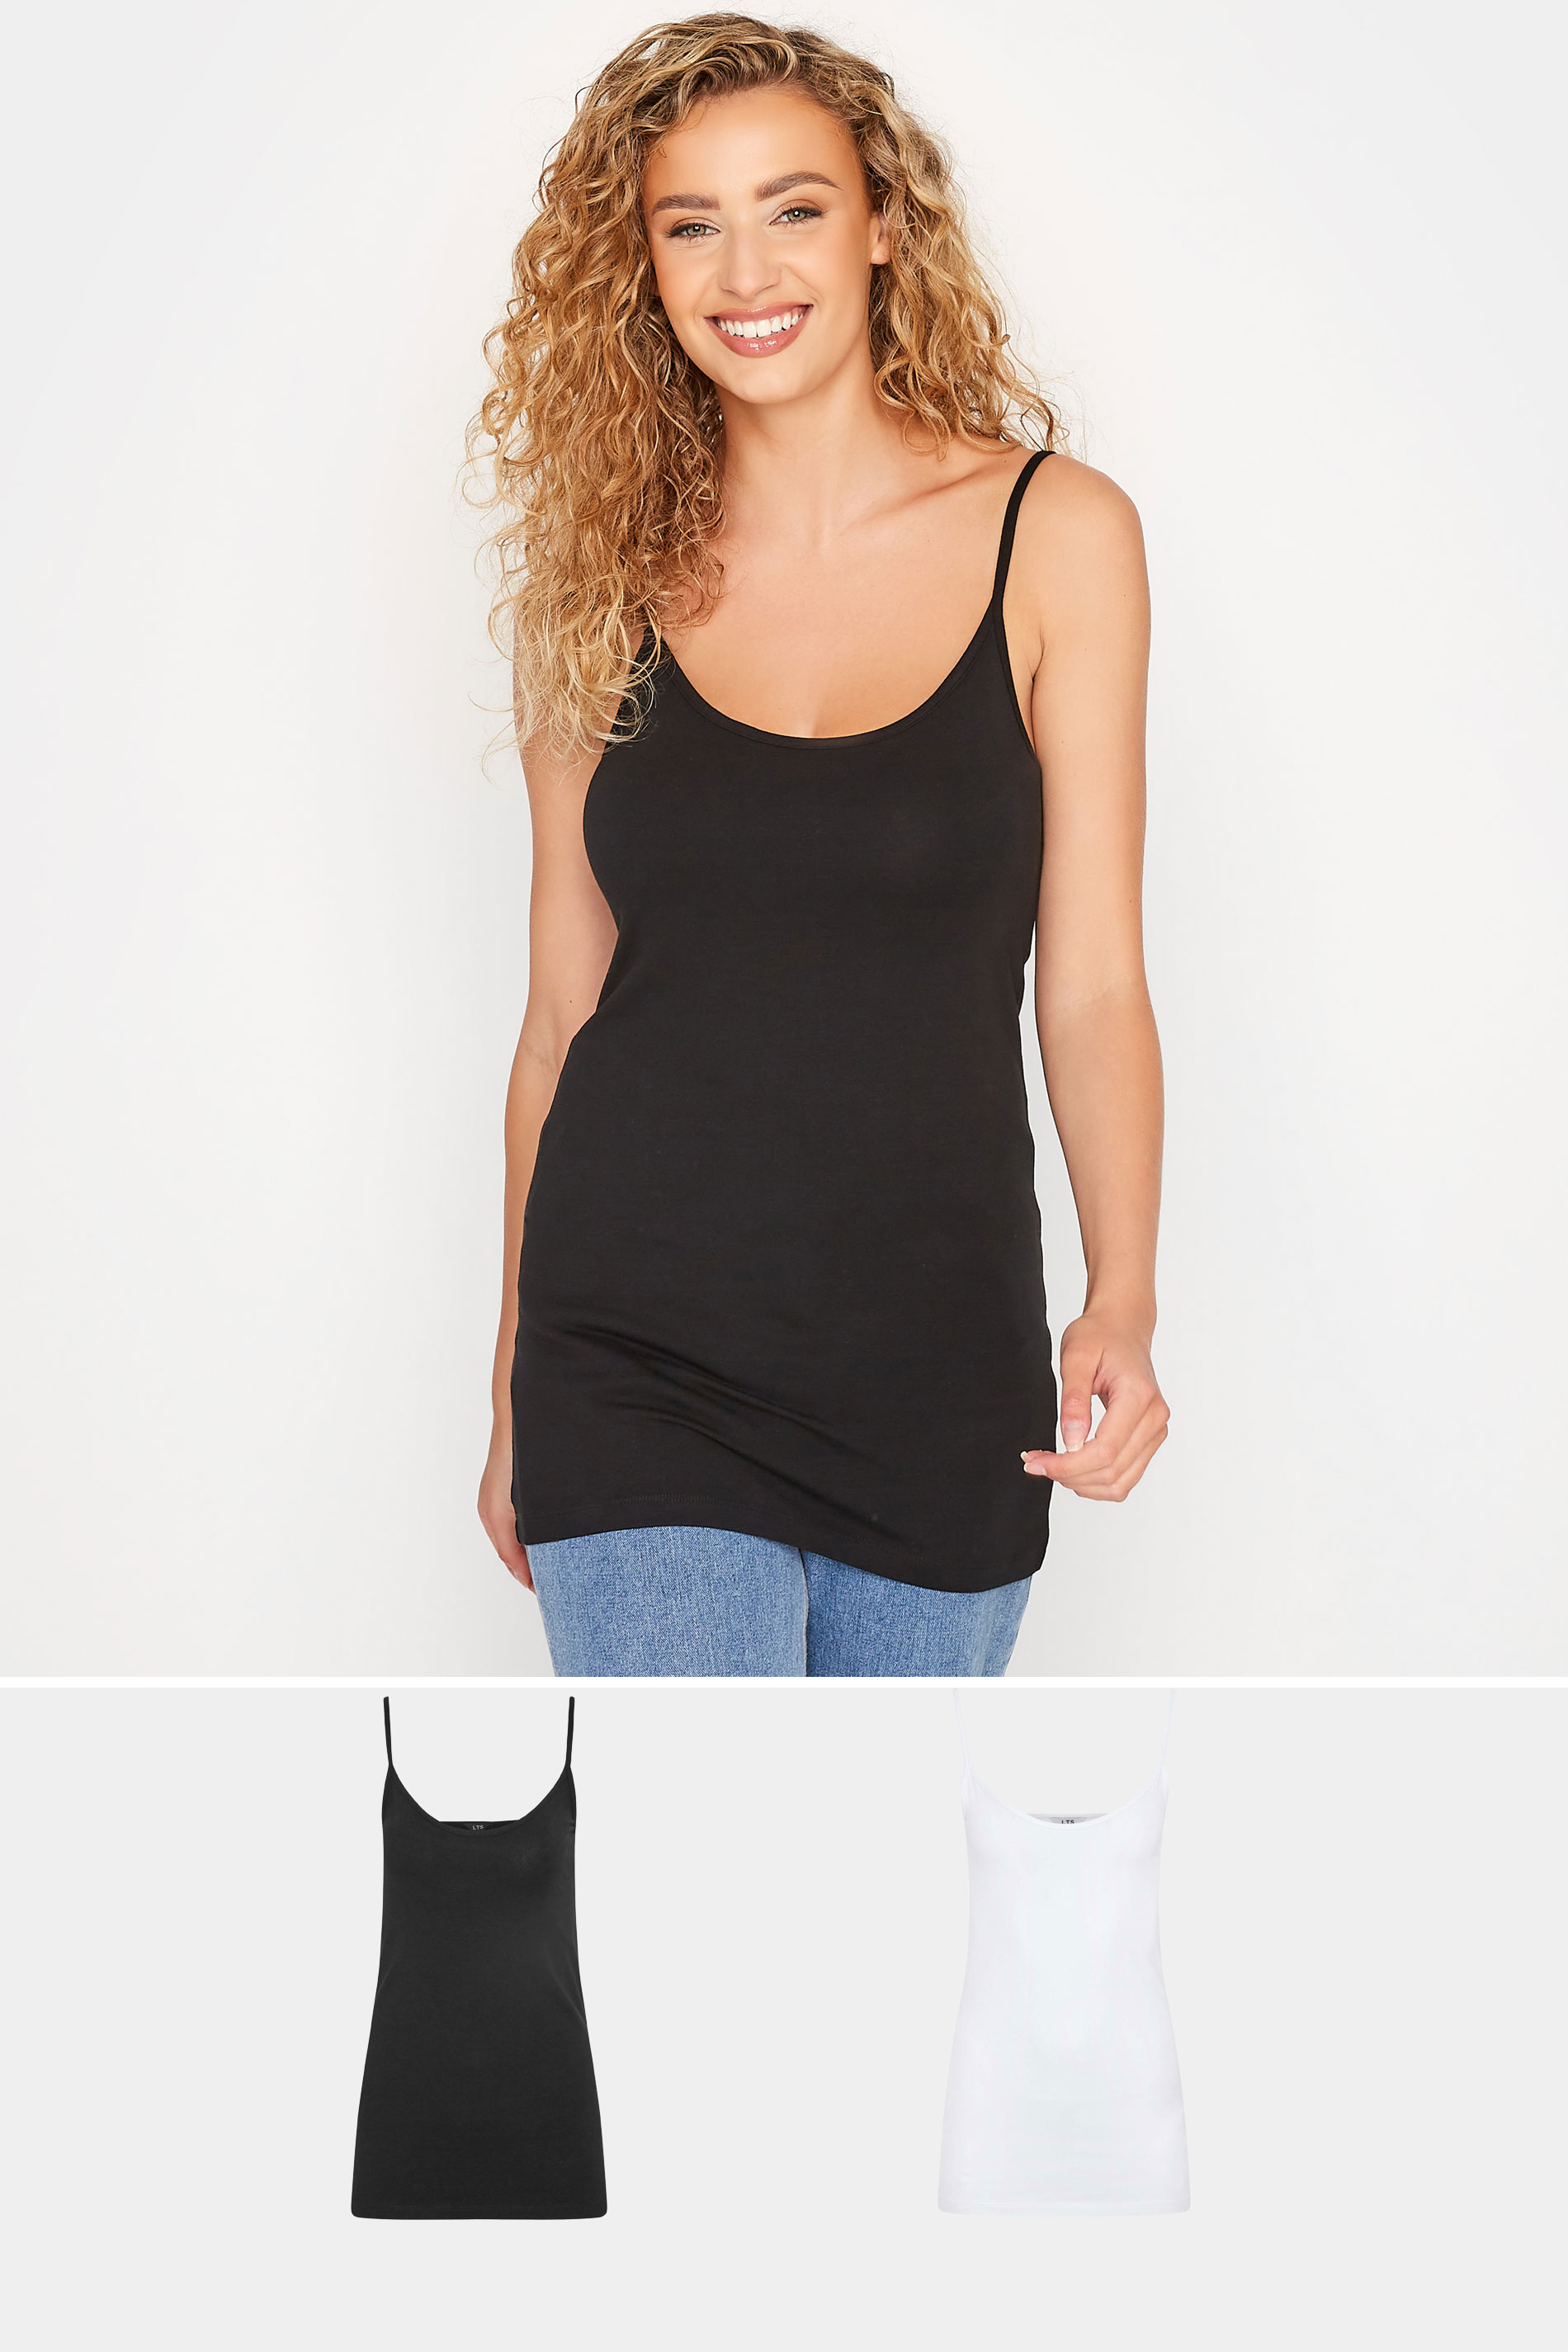 2 PACK Tall Women's Black & White Cami Vest Tops | Long Tall Sally  1